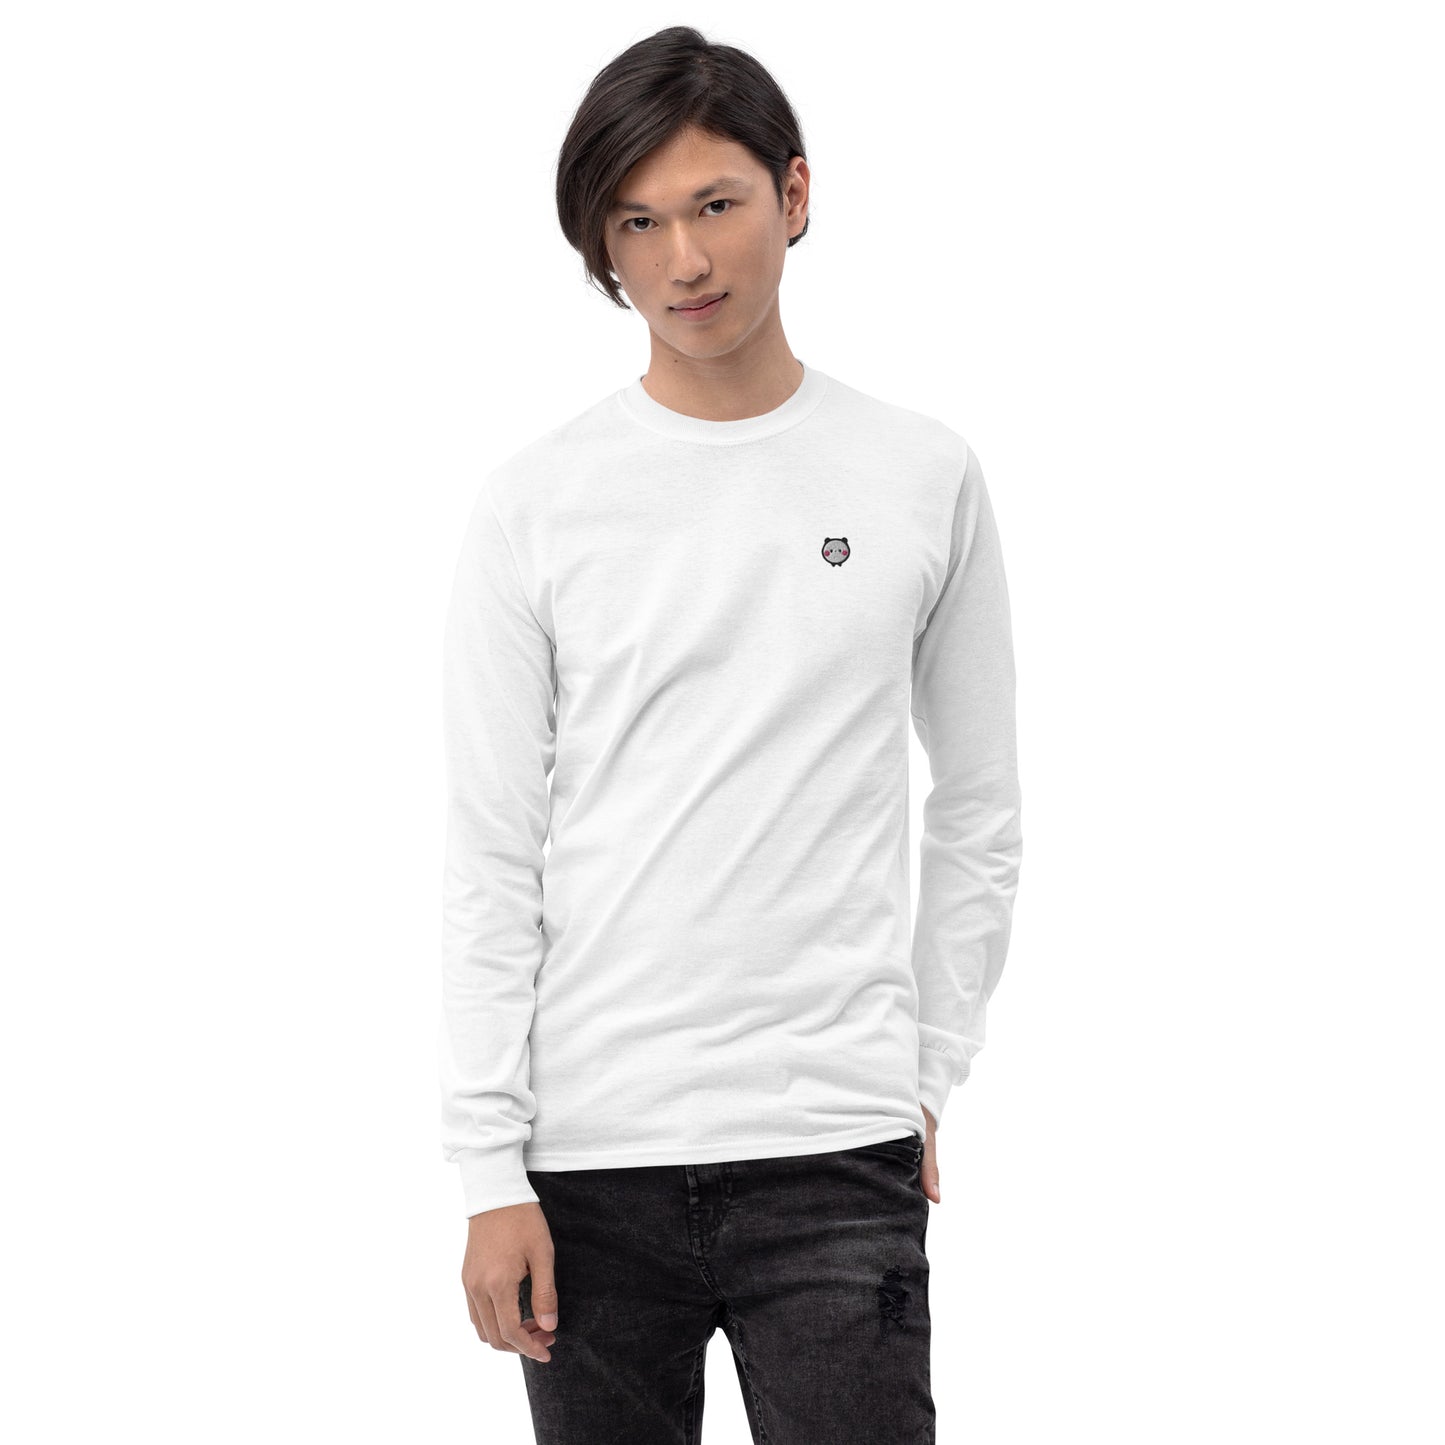 Panda Long Sleeve Shirt - White